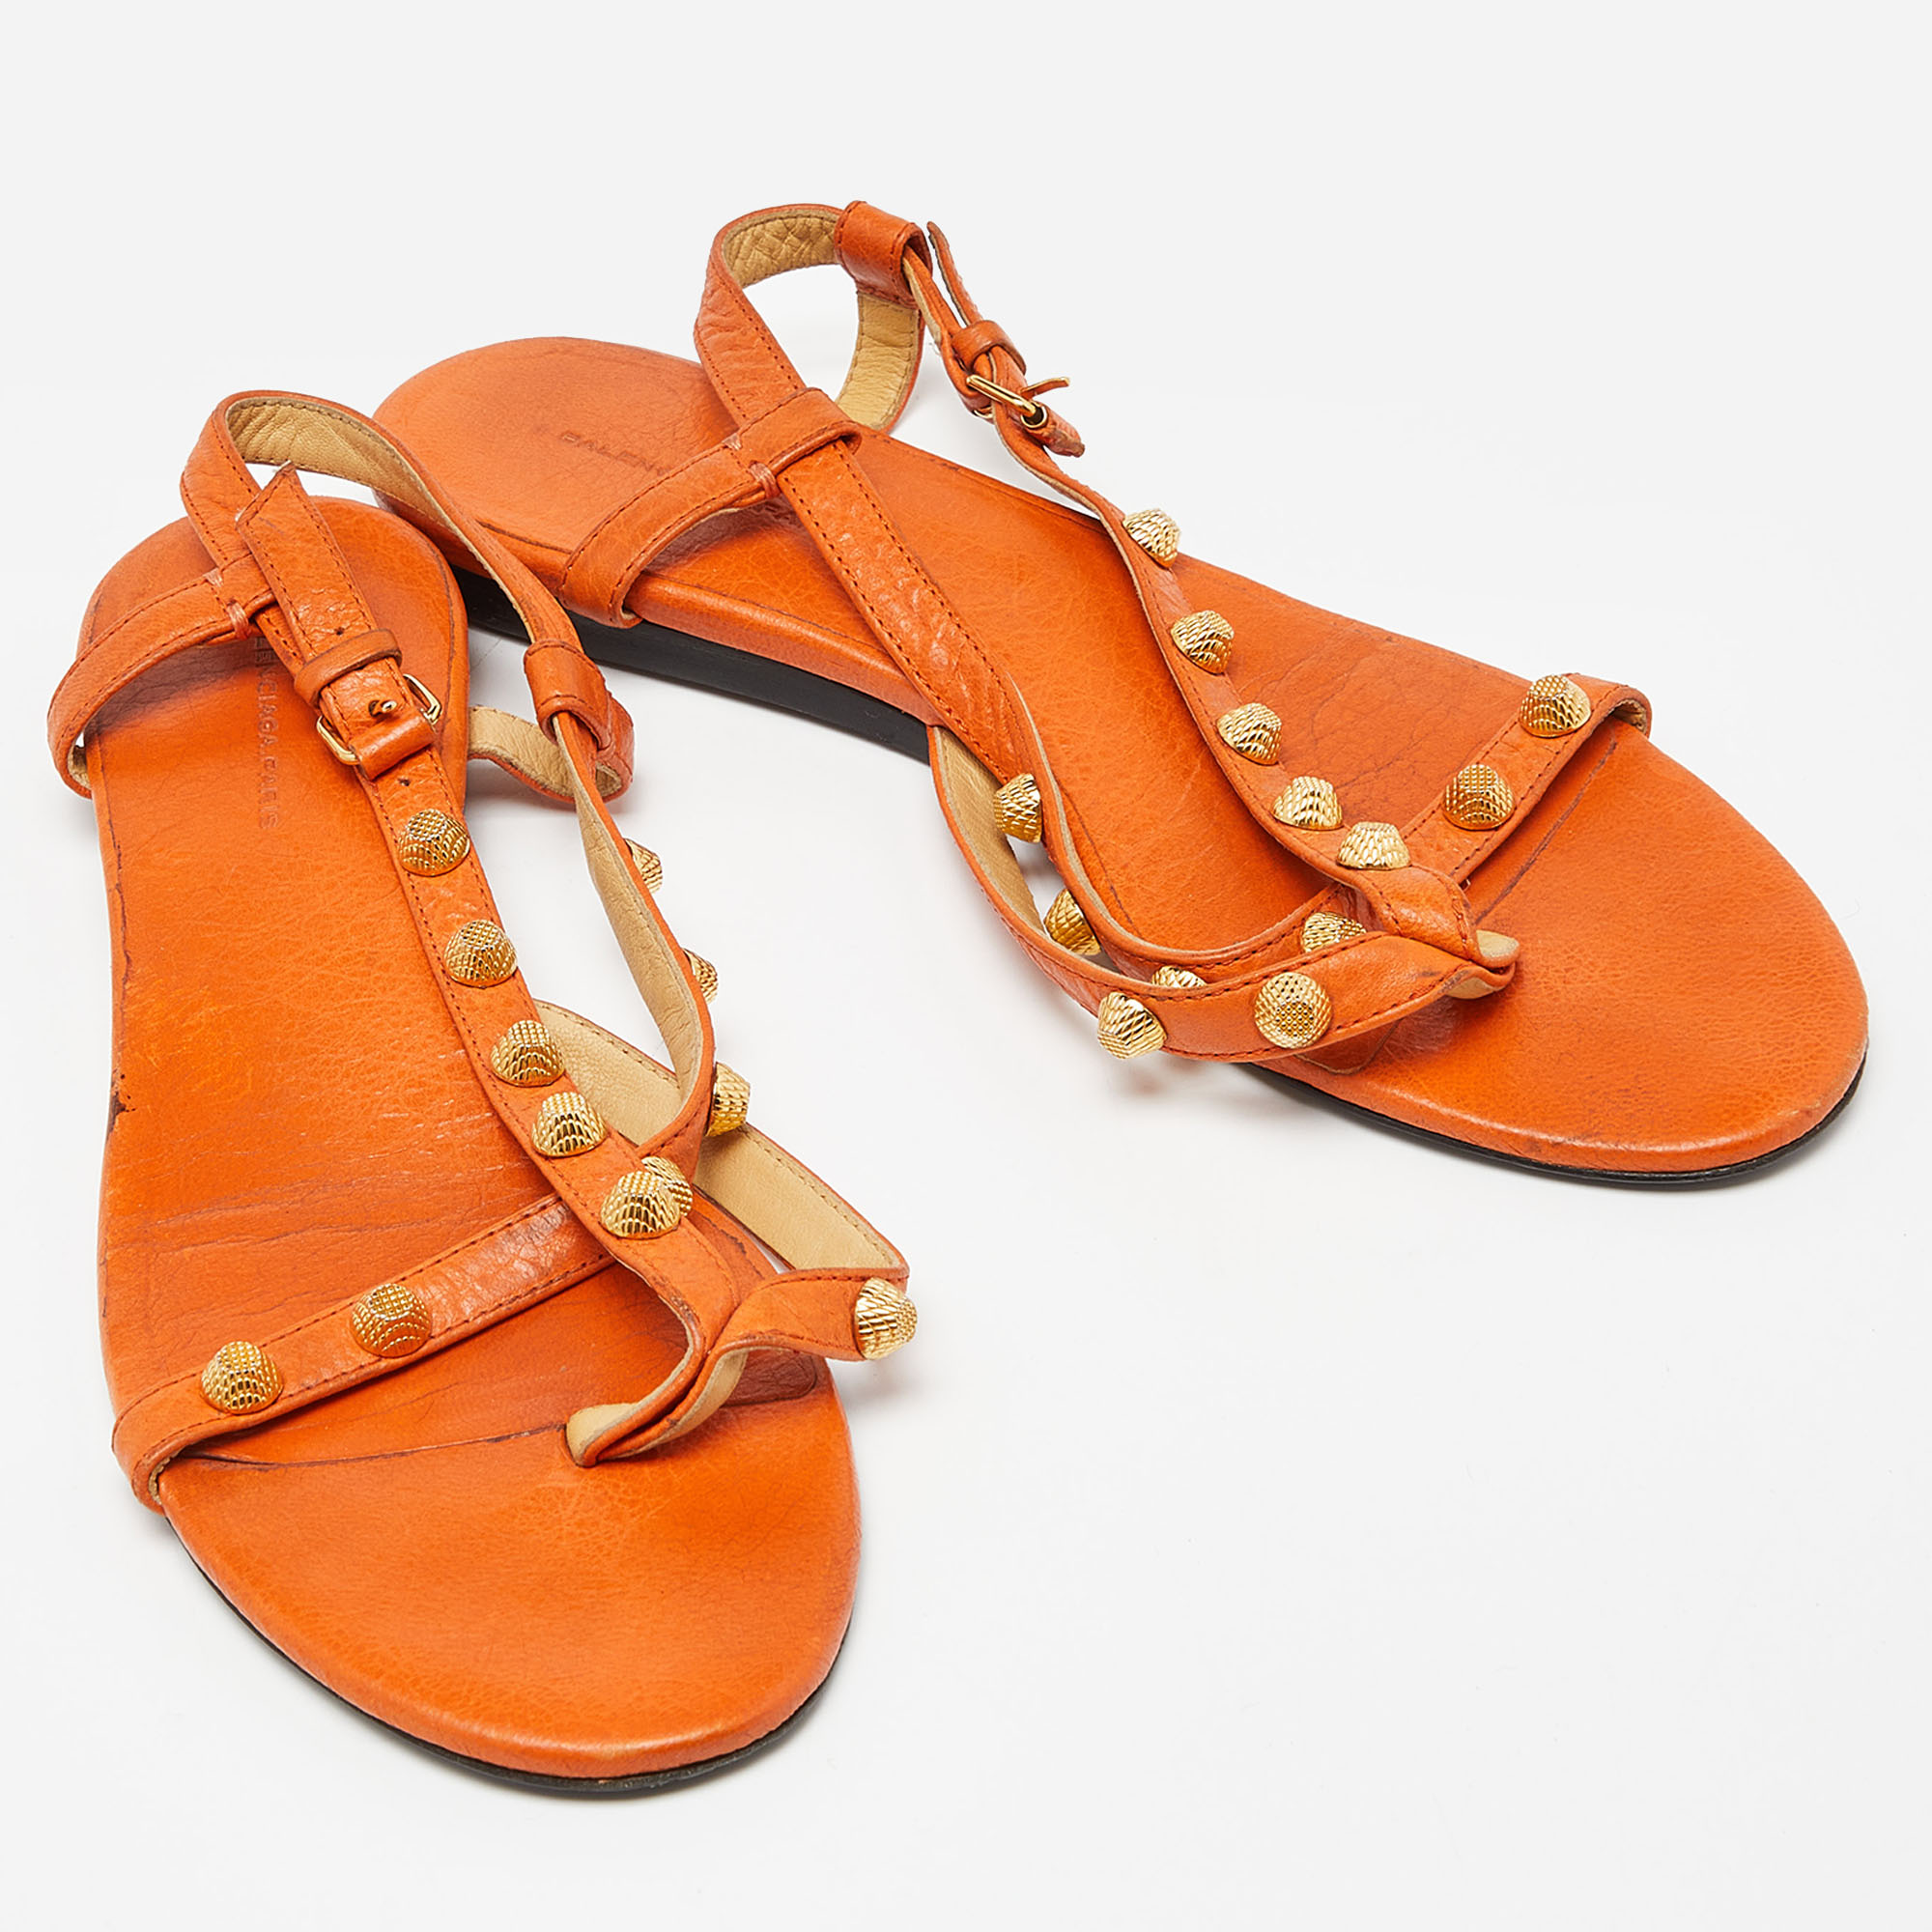 Balenciaga Orange Leather Arena Studded Thong Sandals Size 38.5